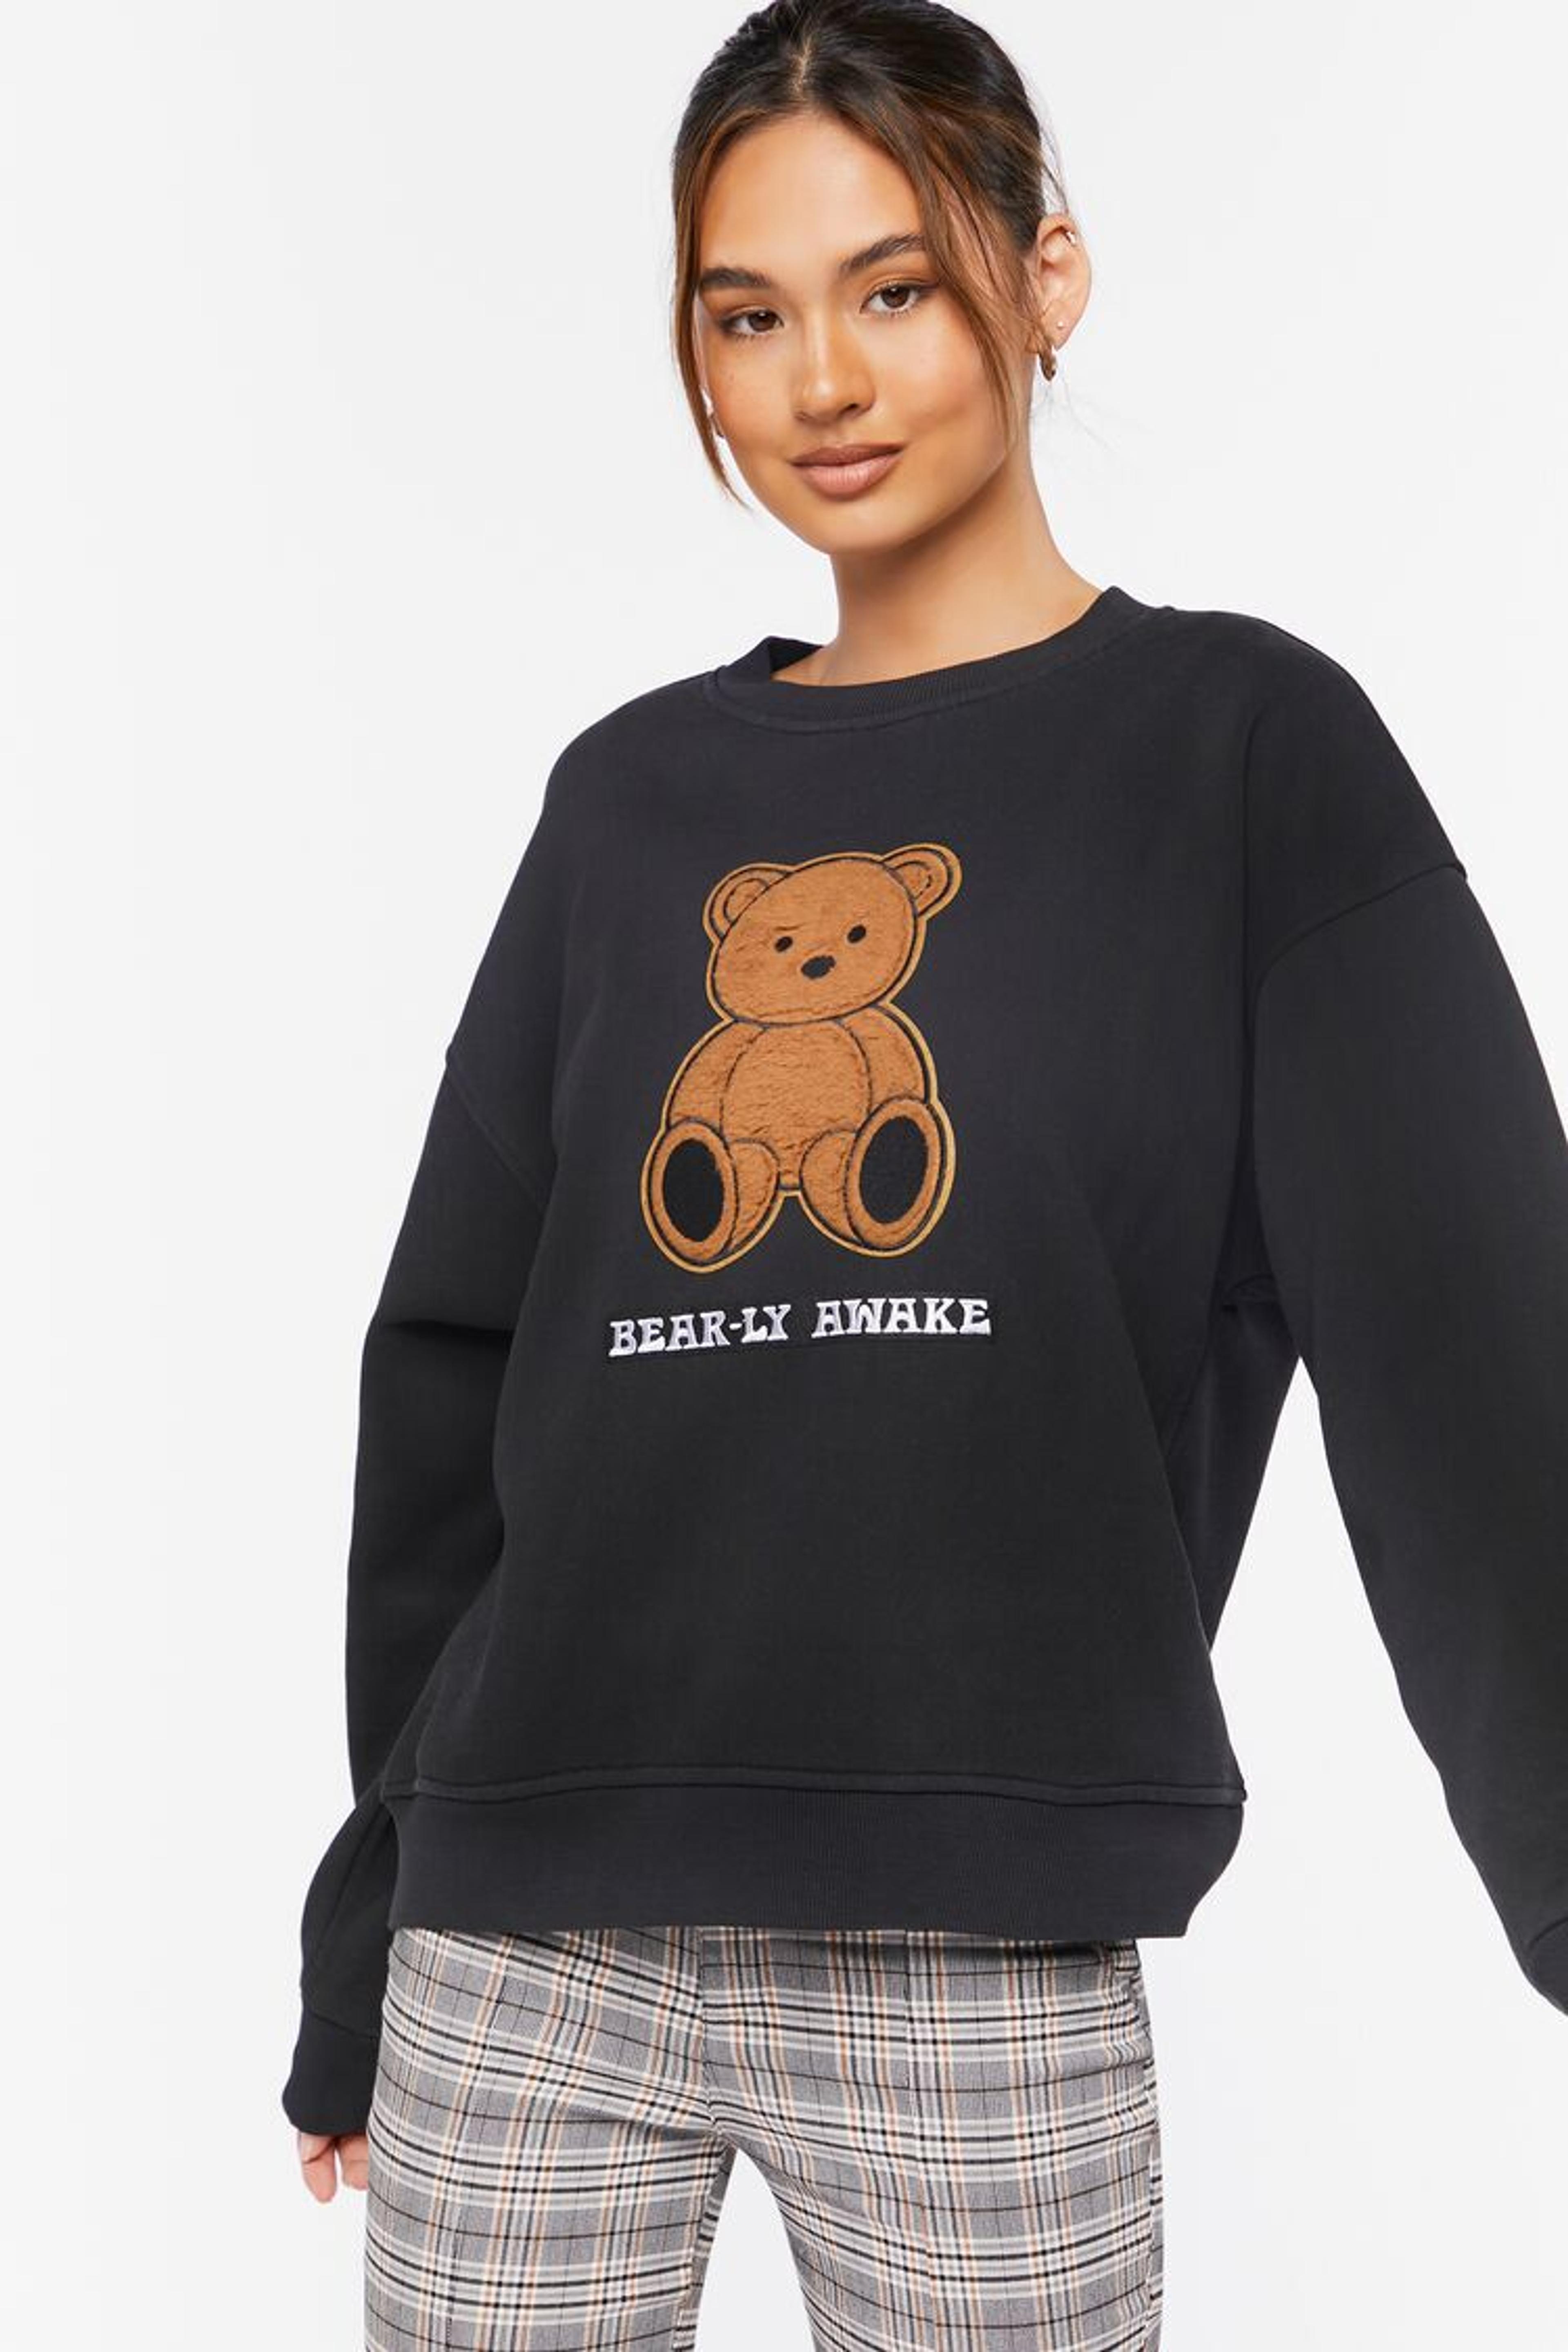 Bear-ly Awake Graphic Pullover